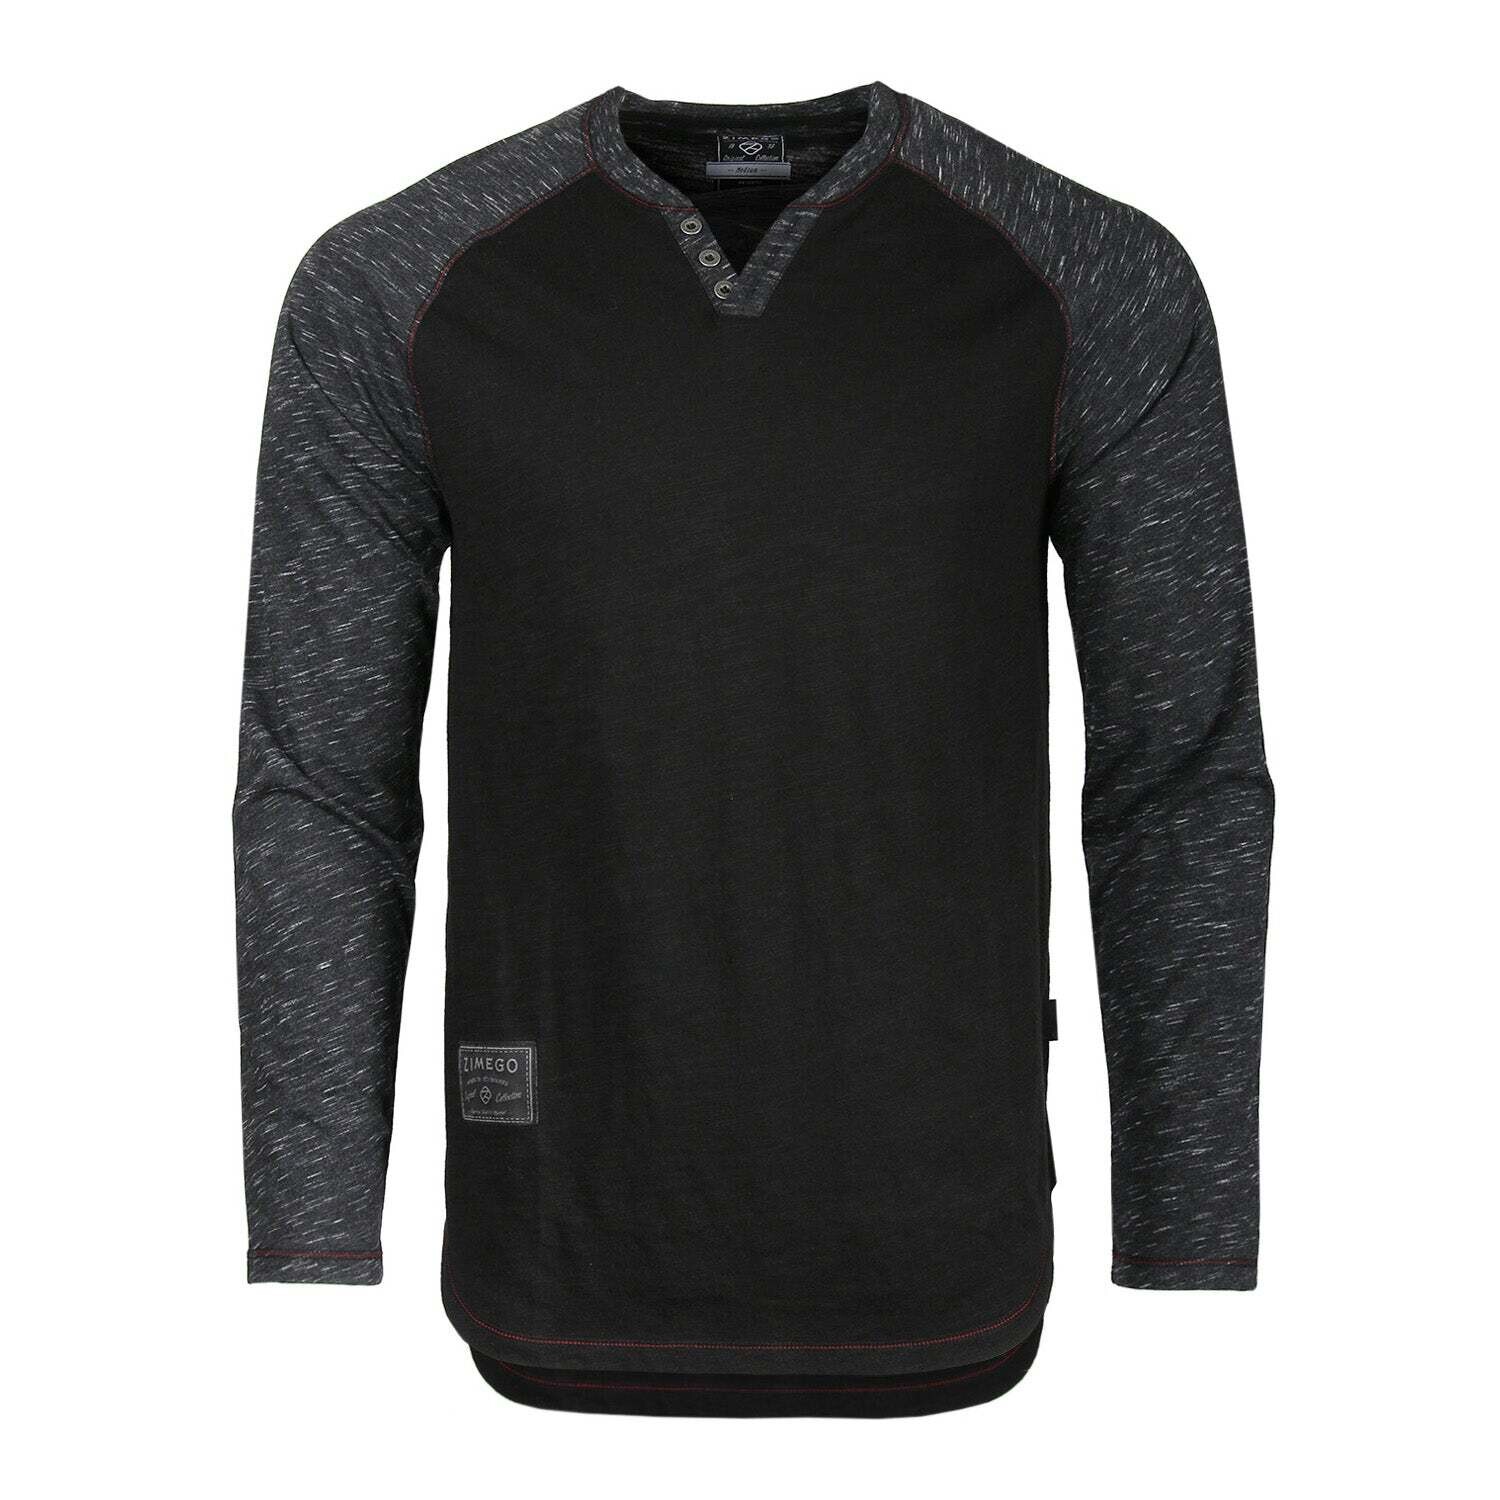 ZIMEGO Long Sleeve Contrast Raglan Henley V-Neck T-Shirts BLK-BLK